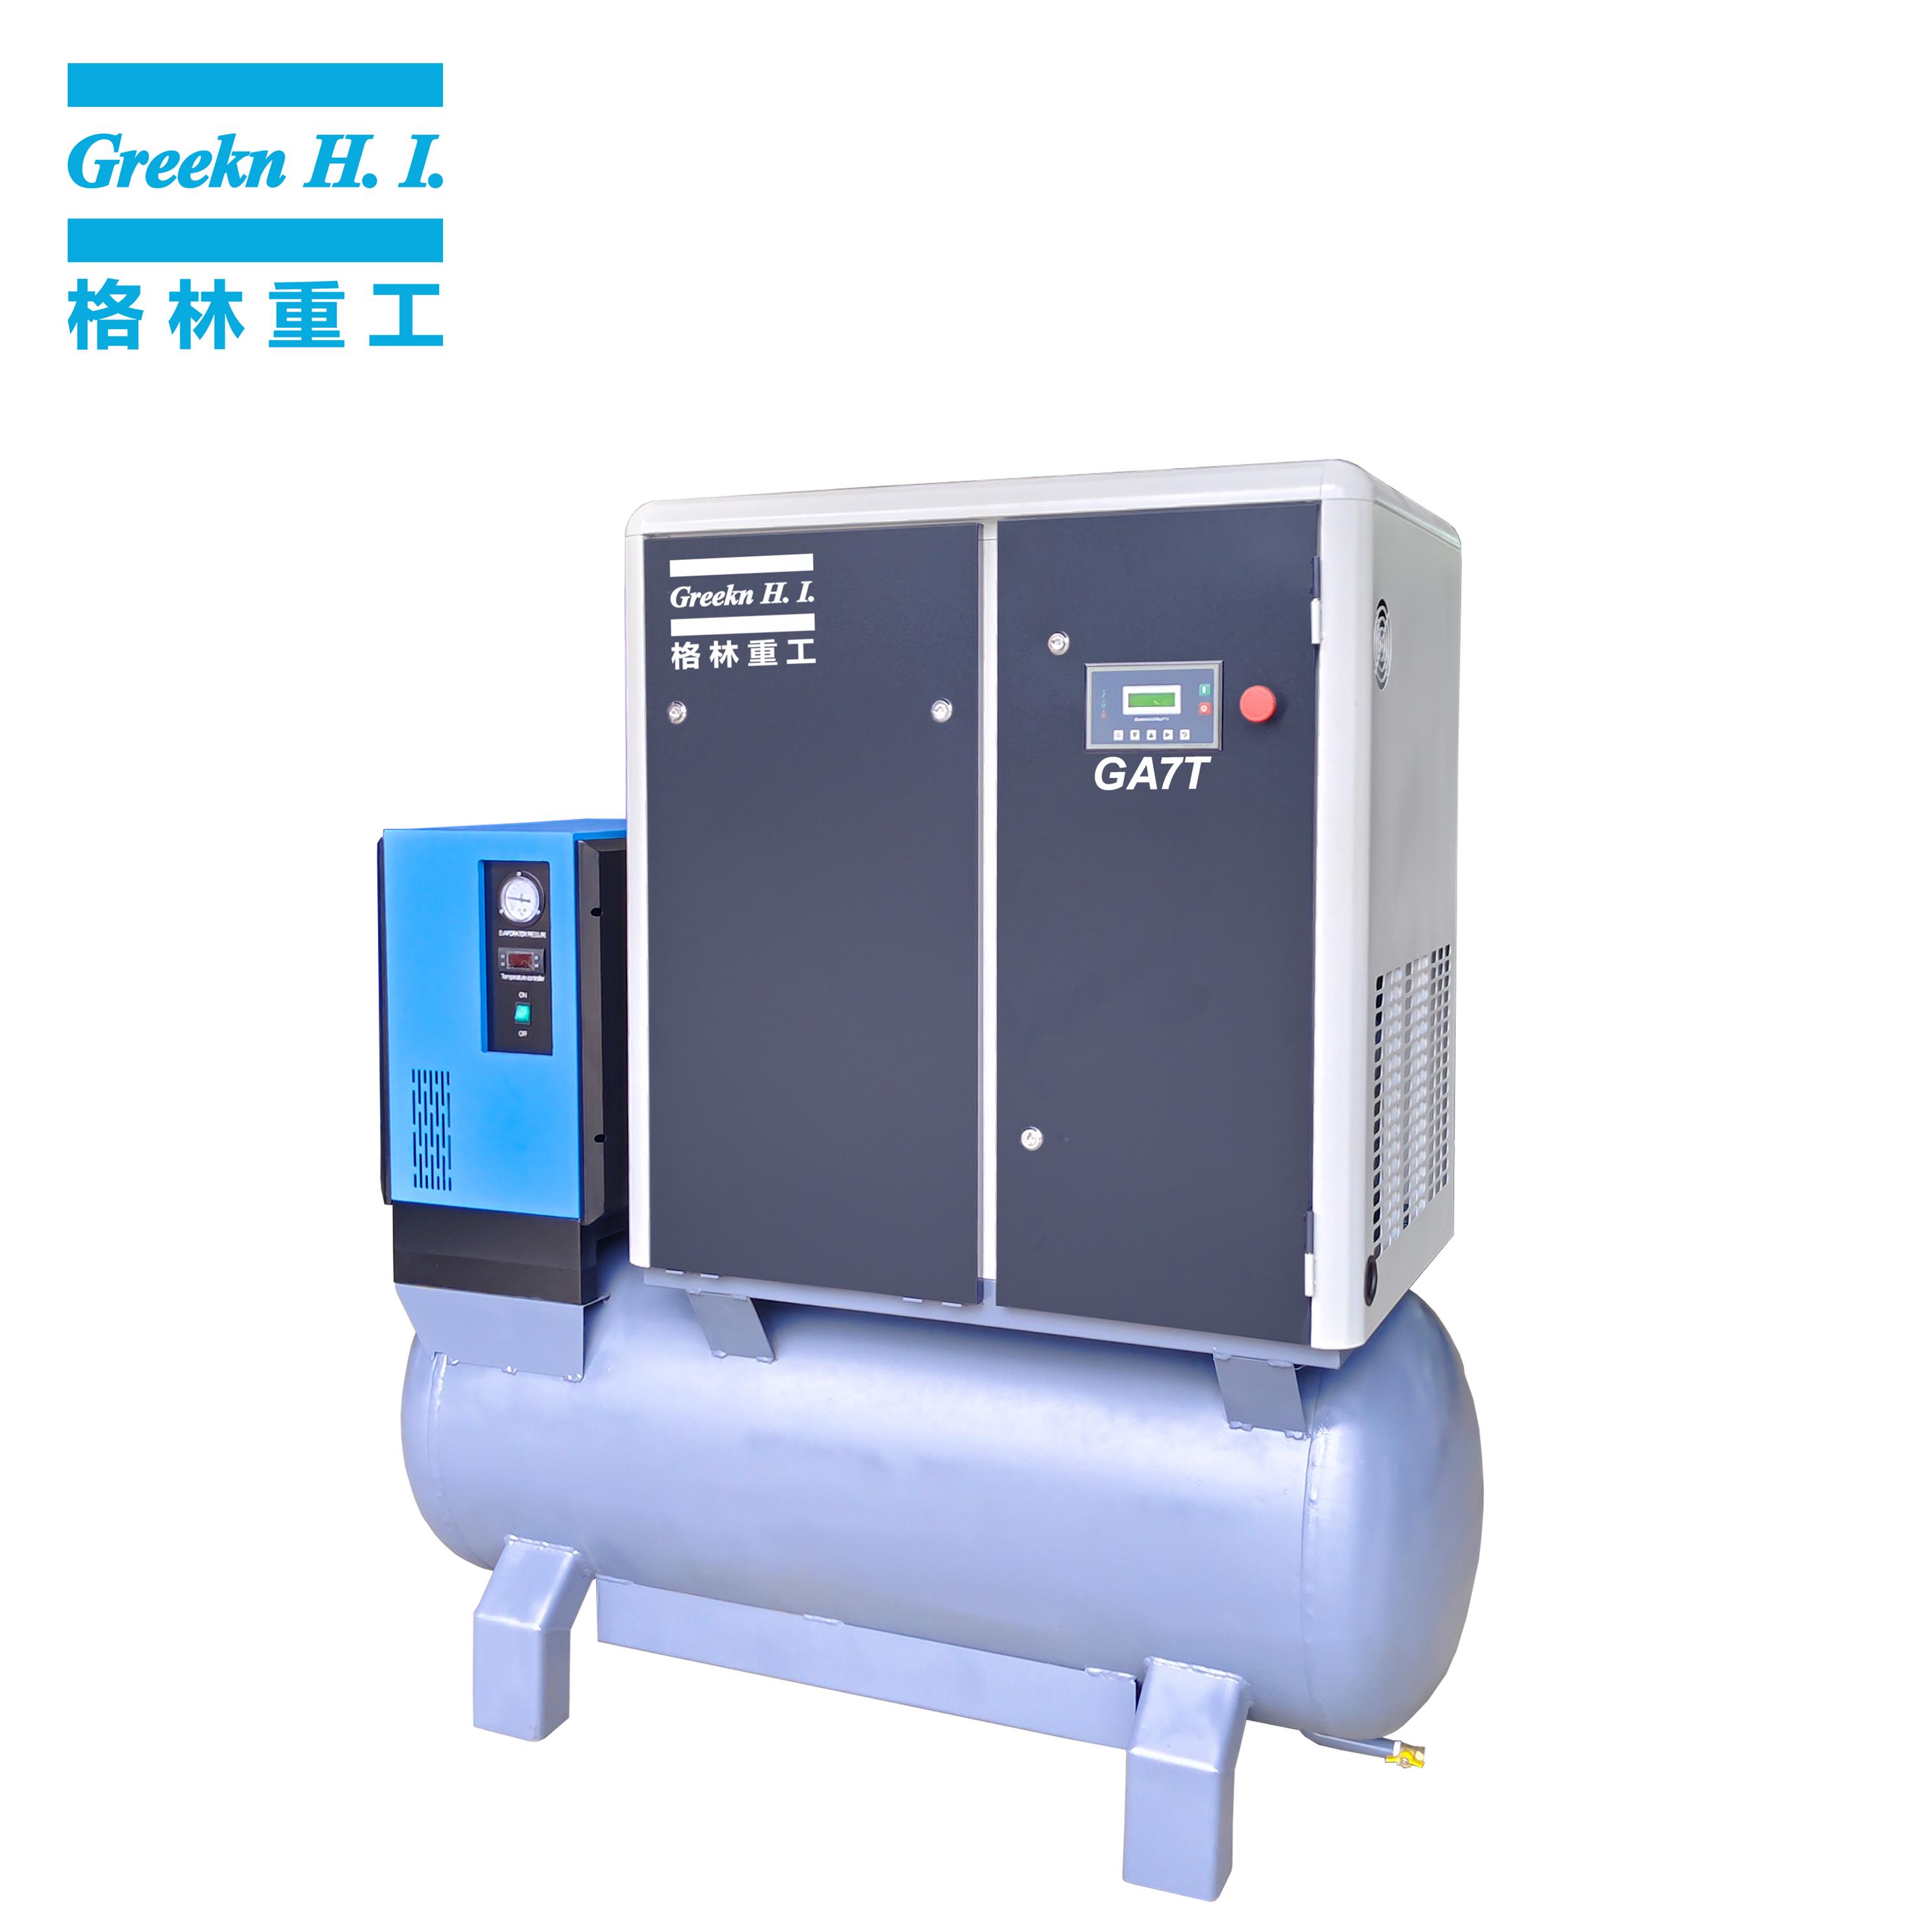 Greeknhi Screw Air Compressor GA7T All In One Type Screw Air Compressor Direct Drive Air Compressor